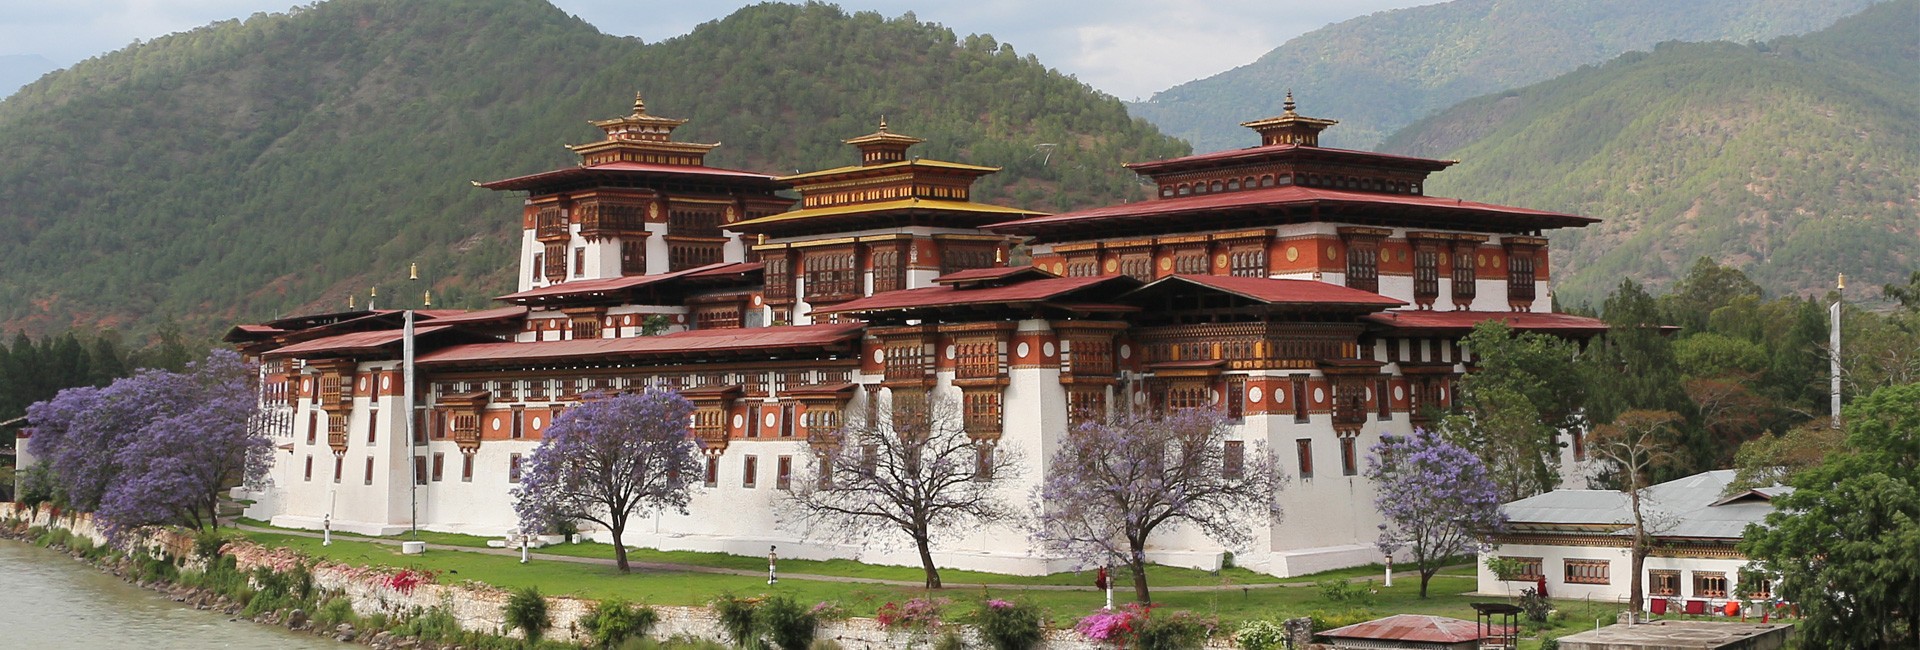 Bhutan tour -5 Days